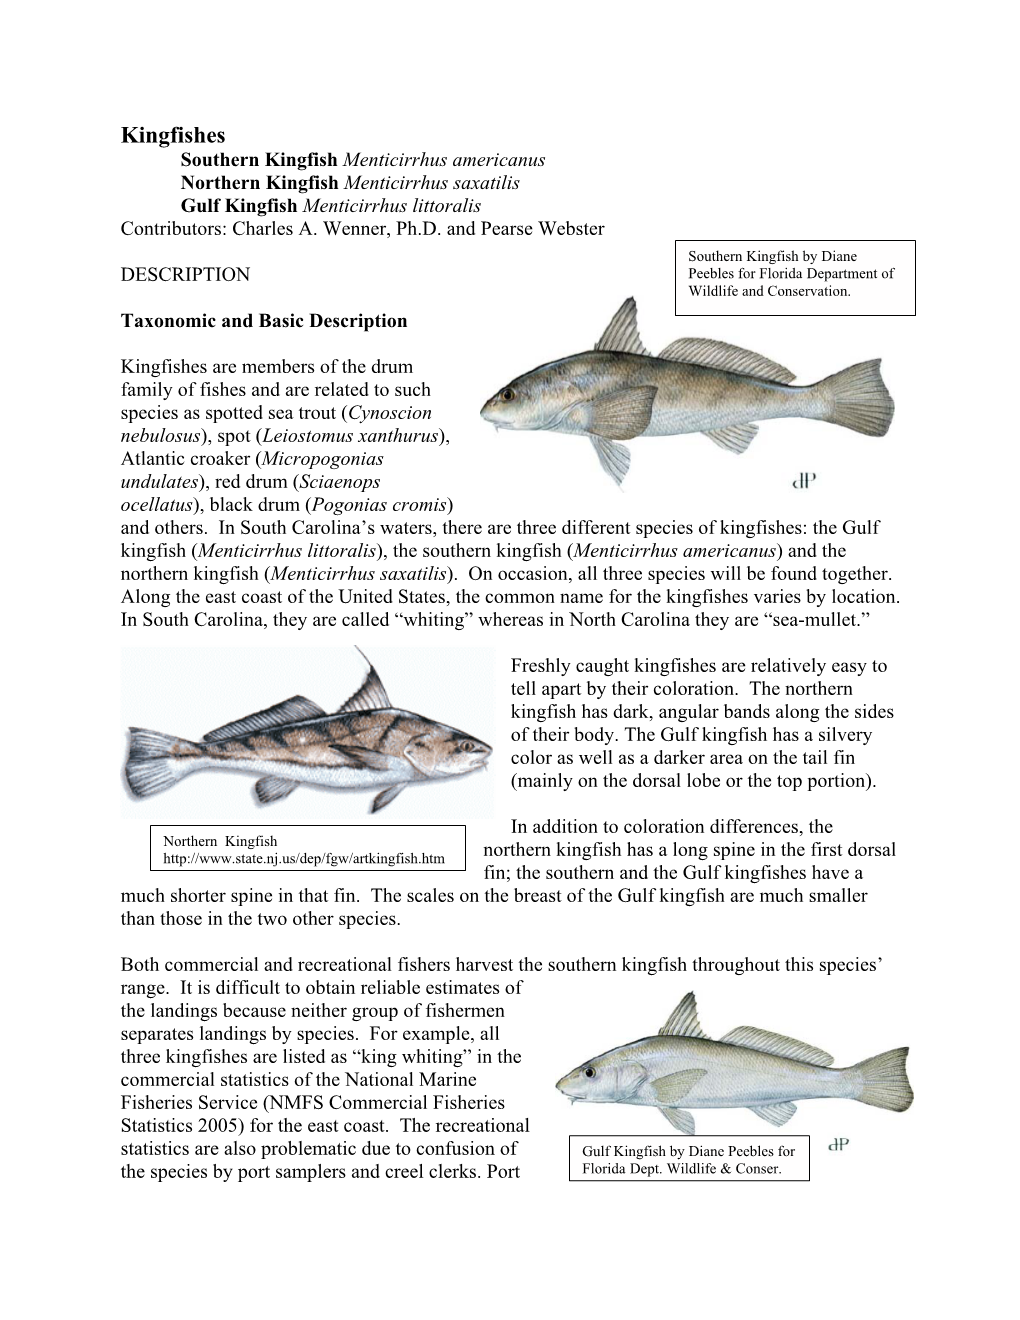 Gulf Kingfish Menticirrhus Littoralis Contributors: Charles A